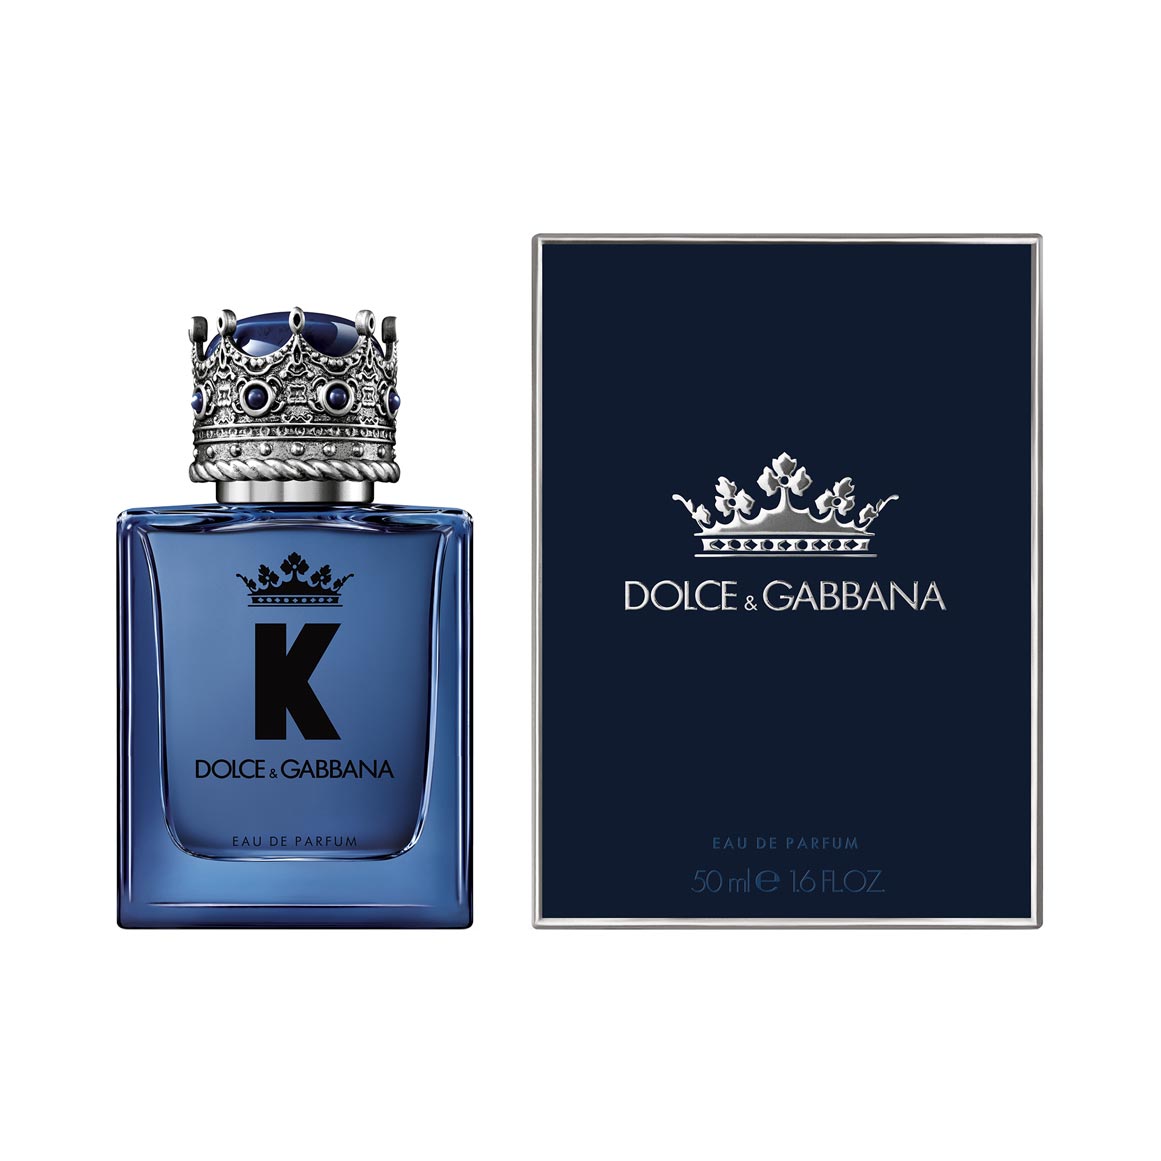 K by Dolce&Gabbana Eau de Parfum | Woolworths.co.za